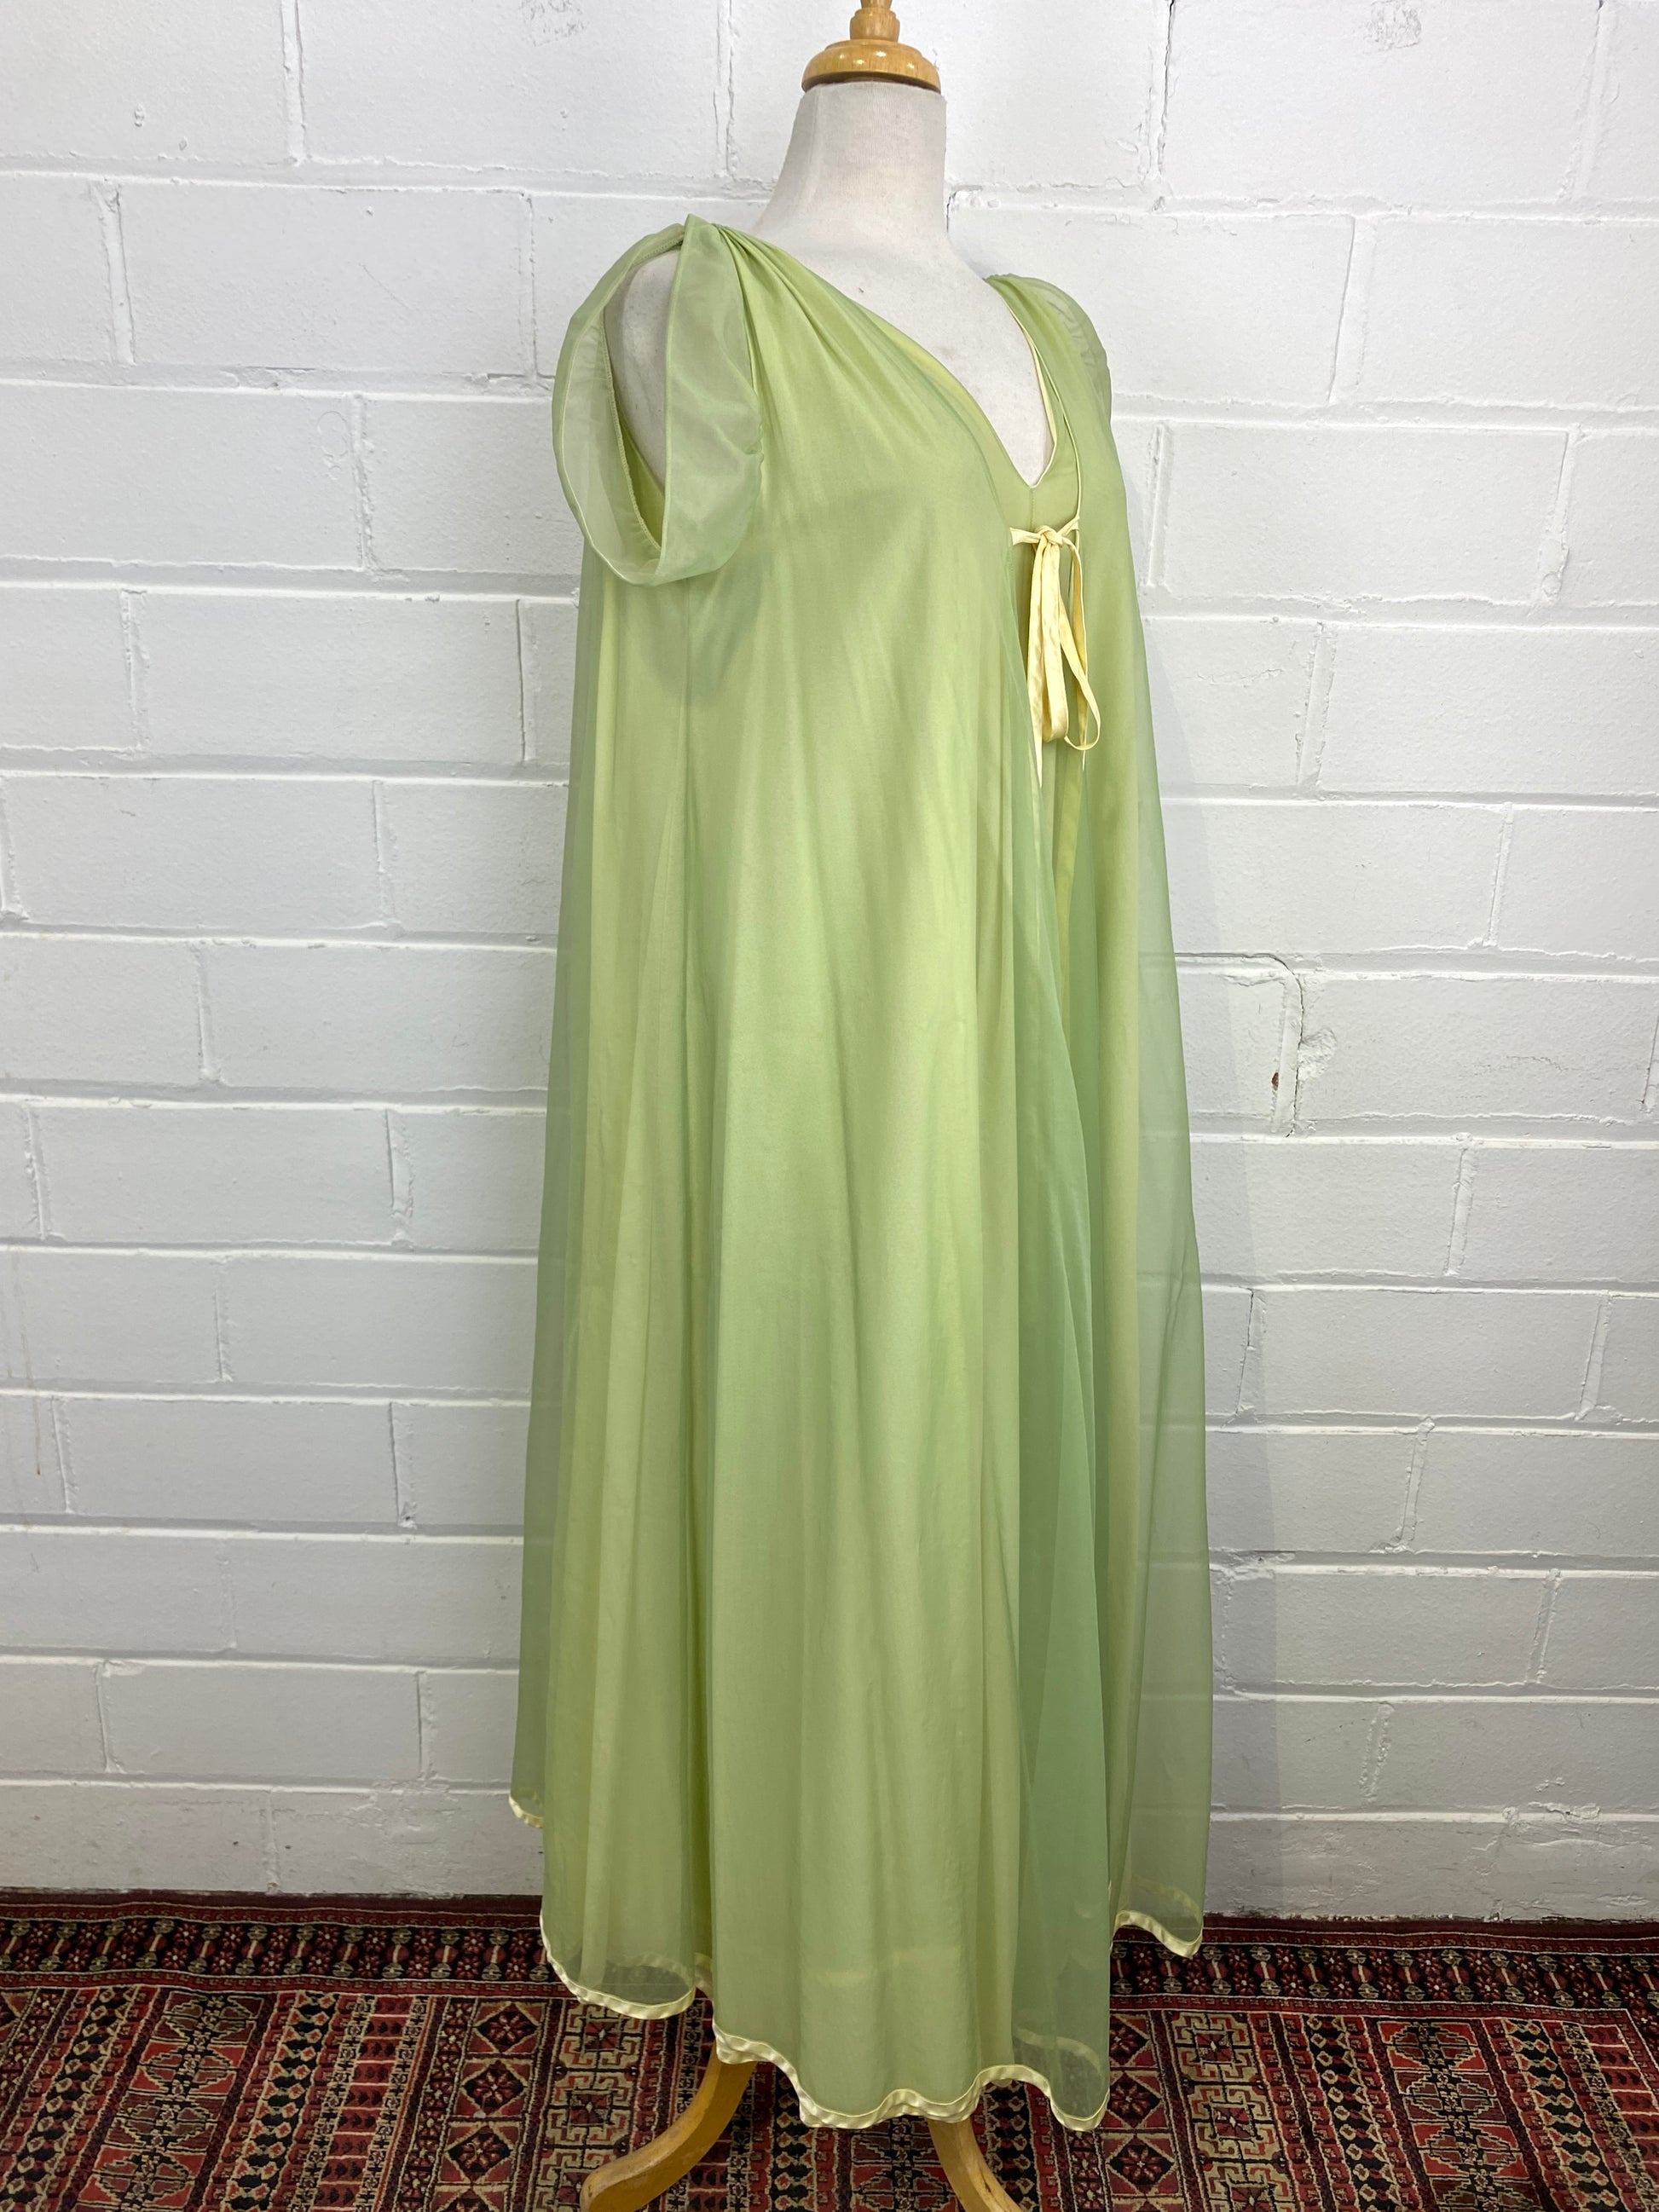 Vintage 1960s Green Chiffon Nightgown & Full Sweep Peignoir Negligee Set